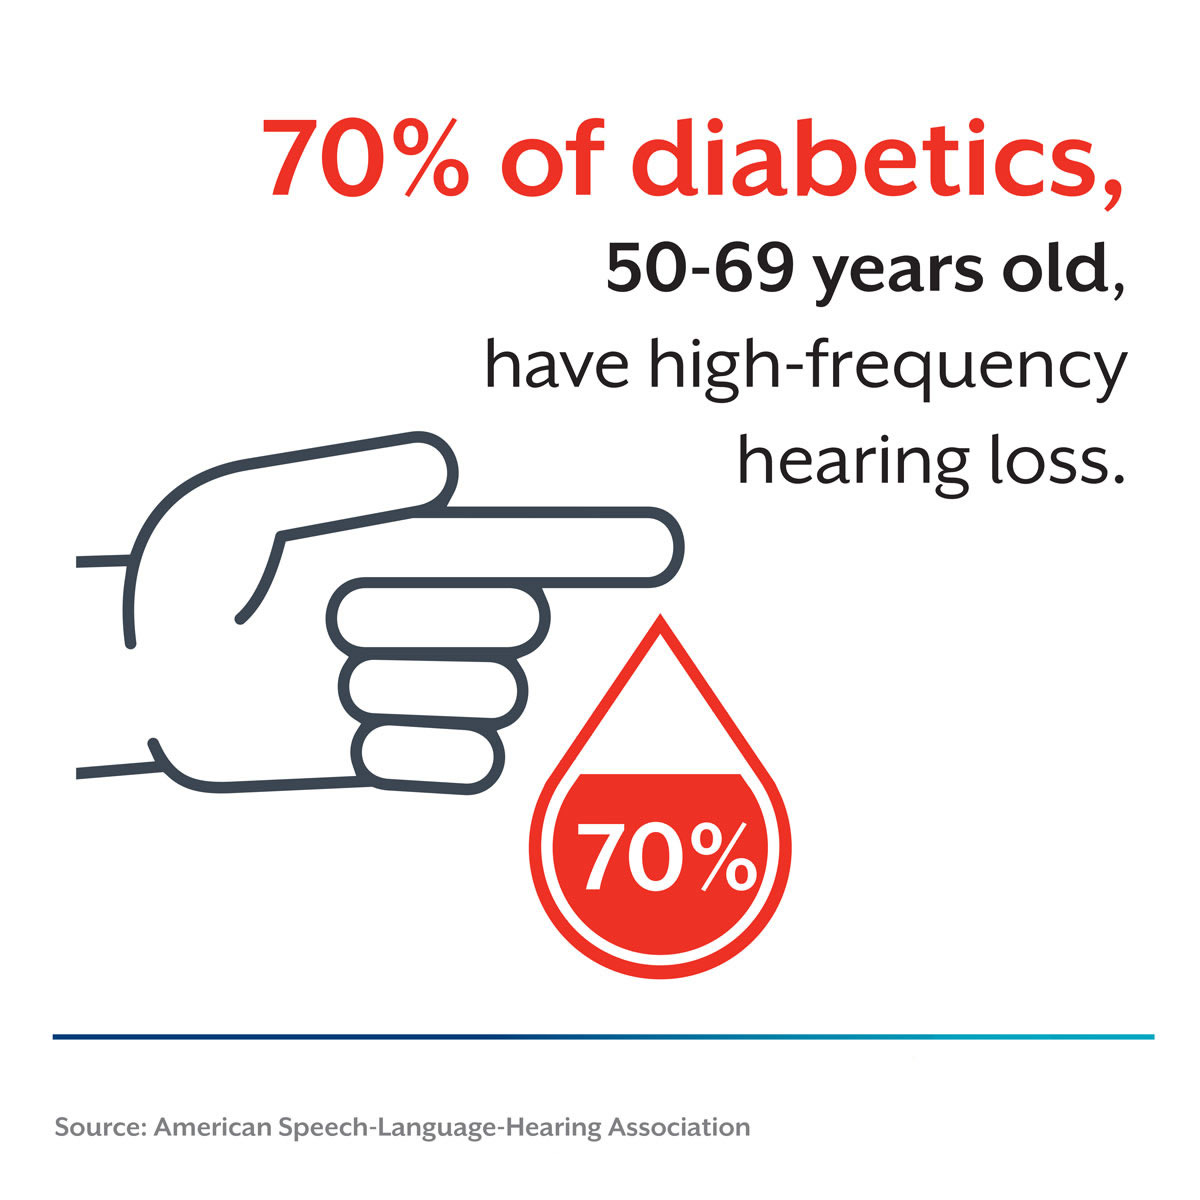 Diabetes-increases-chances-of-hearing-loss